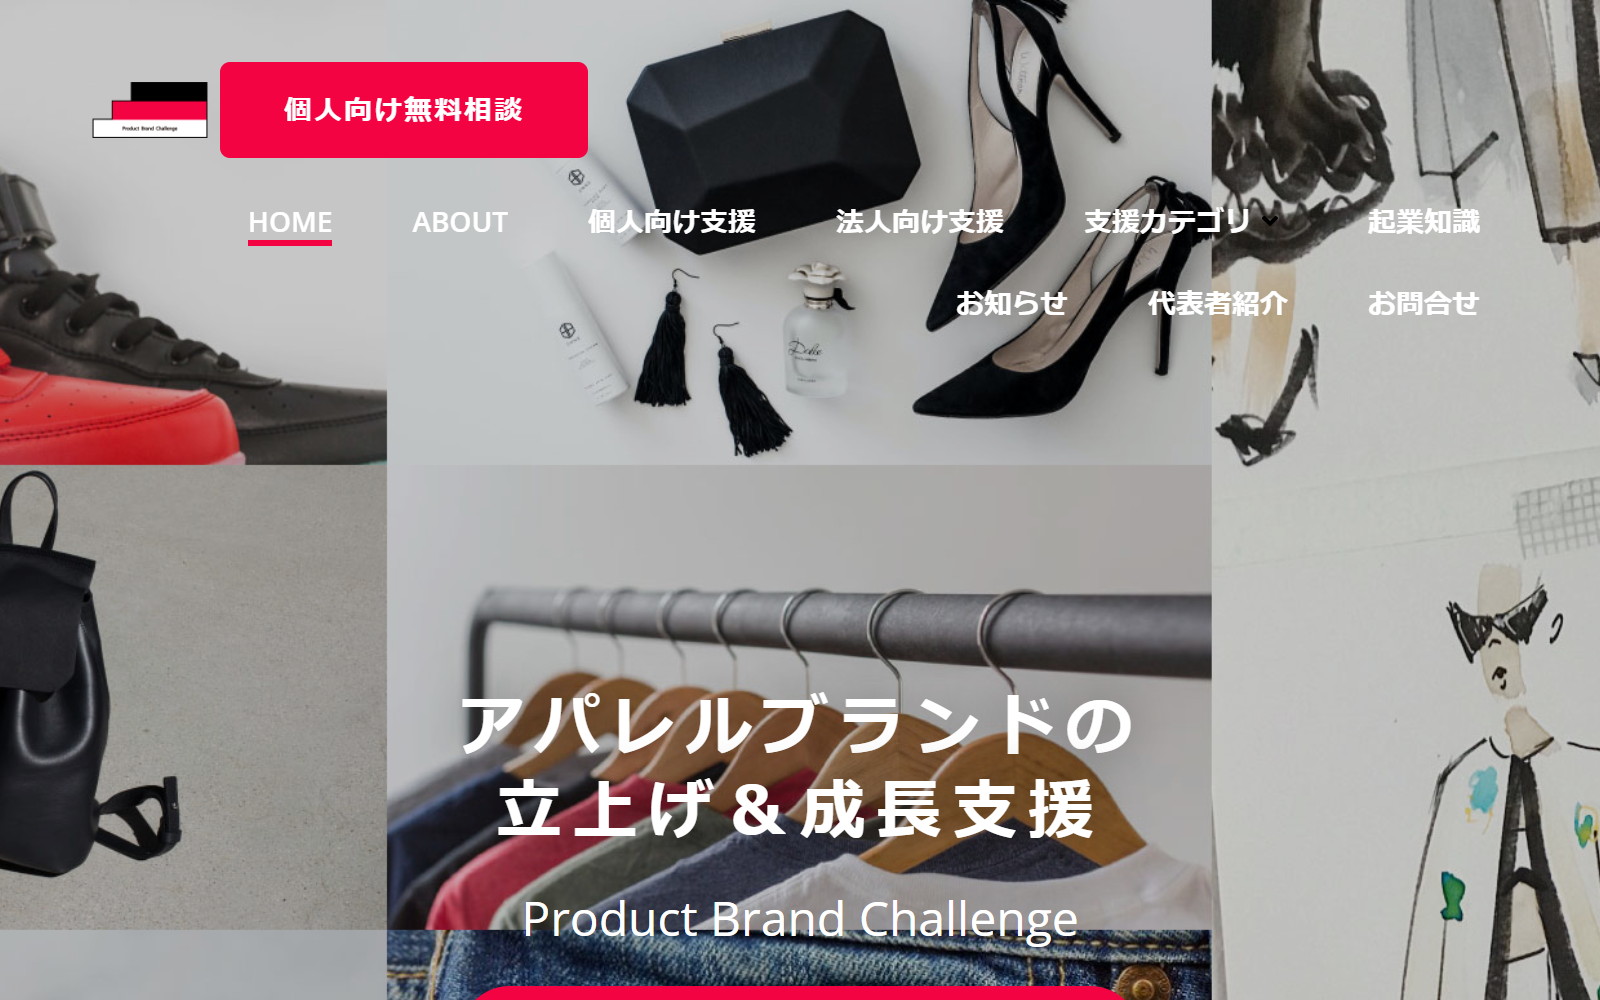 Product Brand Challenge